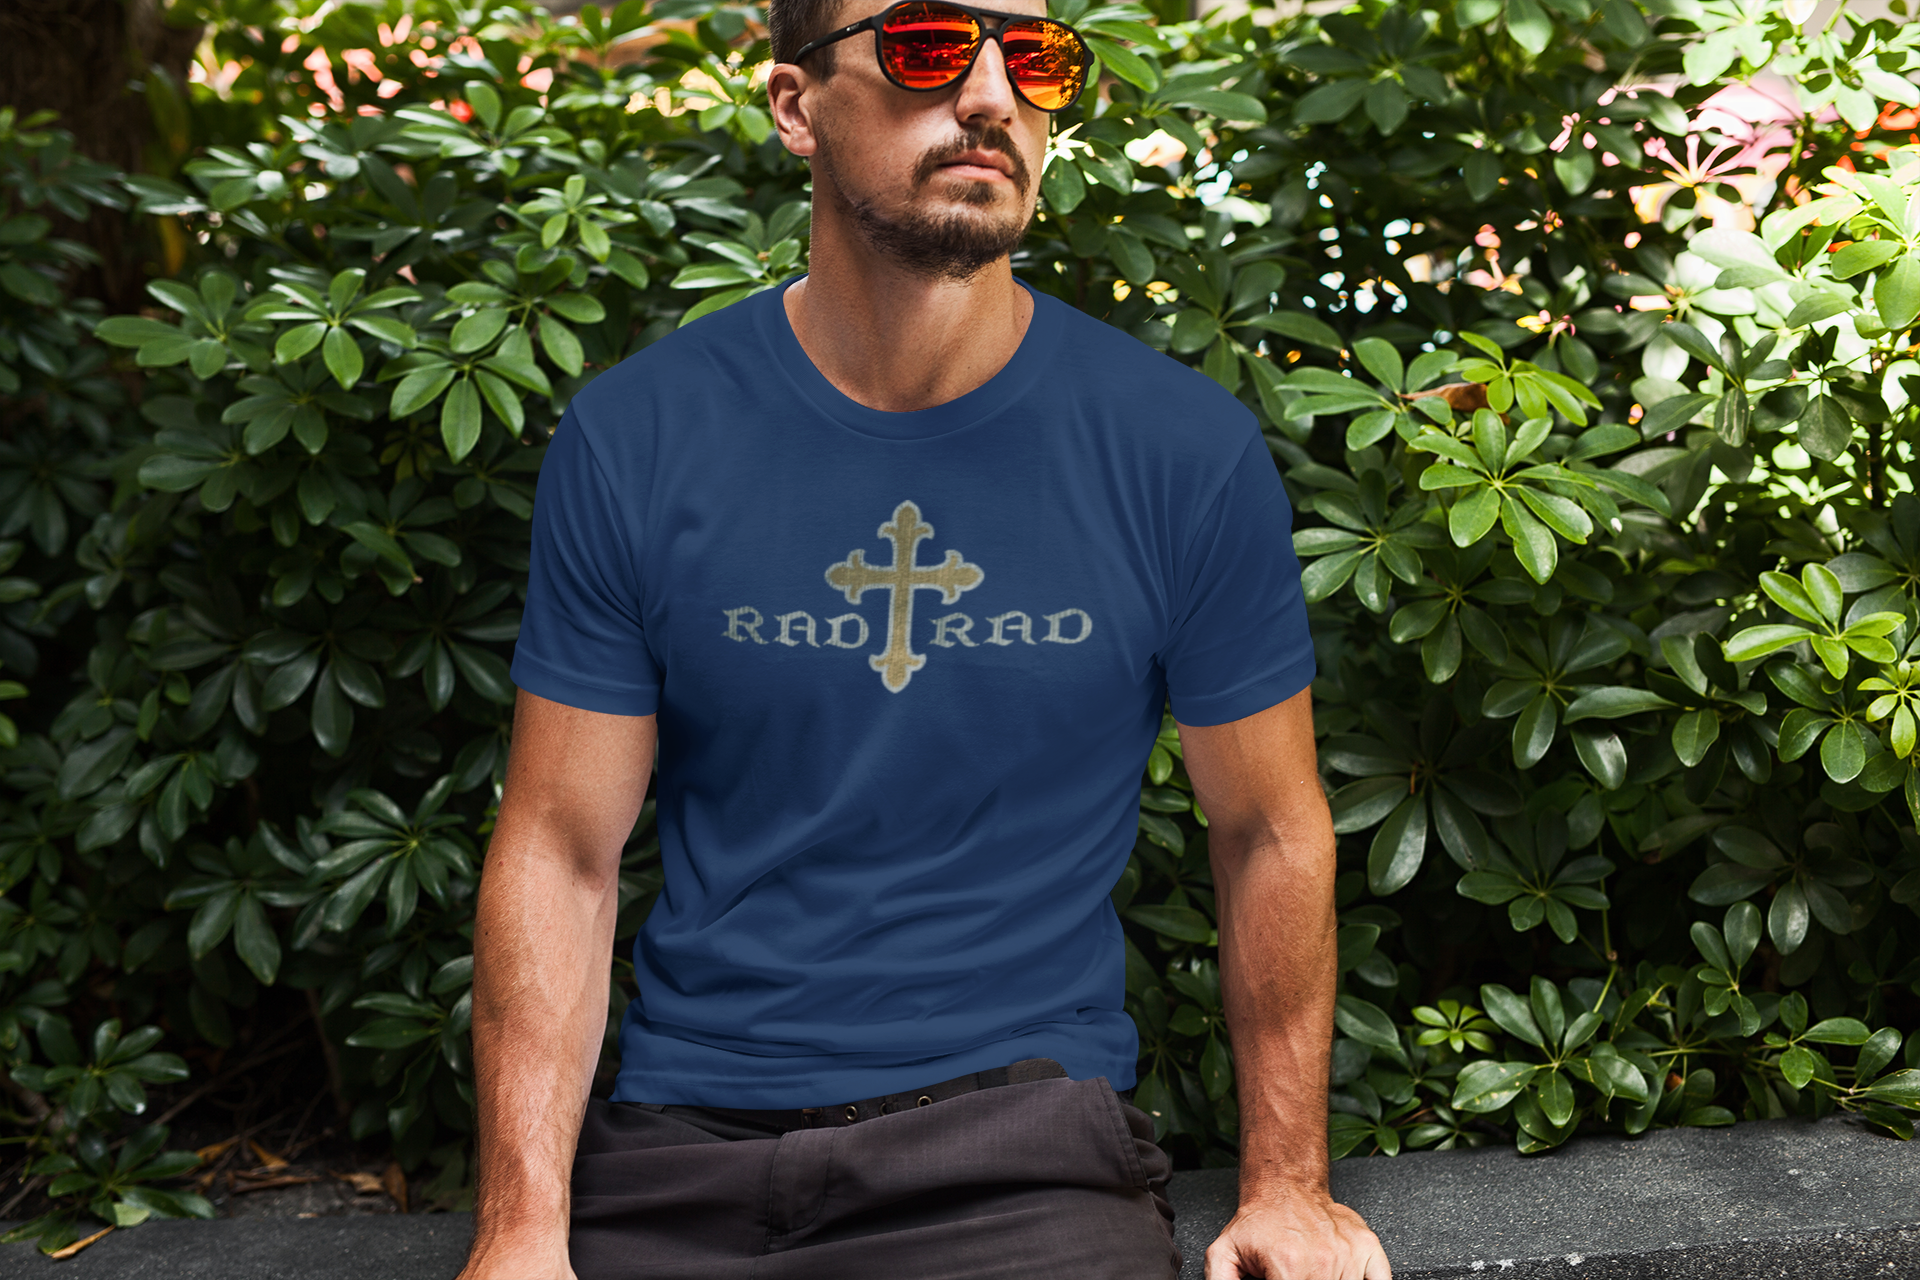 Rad Trad Premium T-Shirt #radtrad